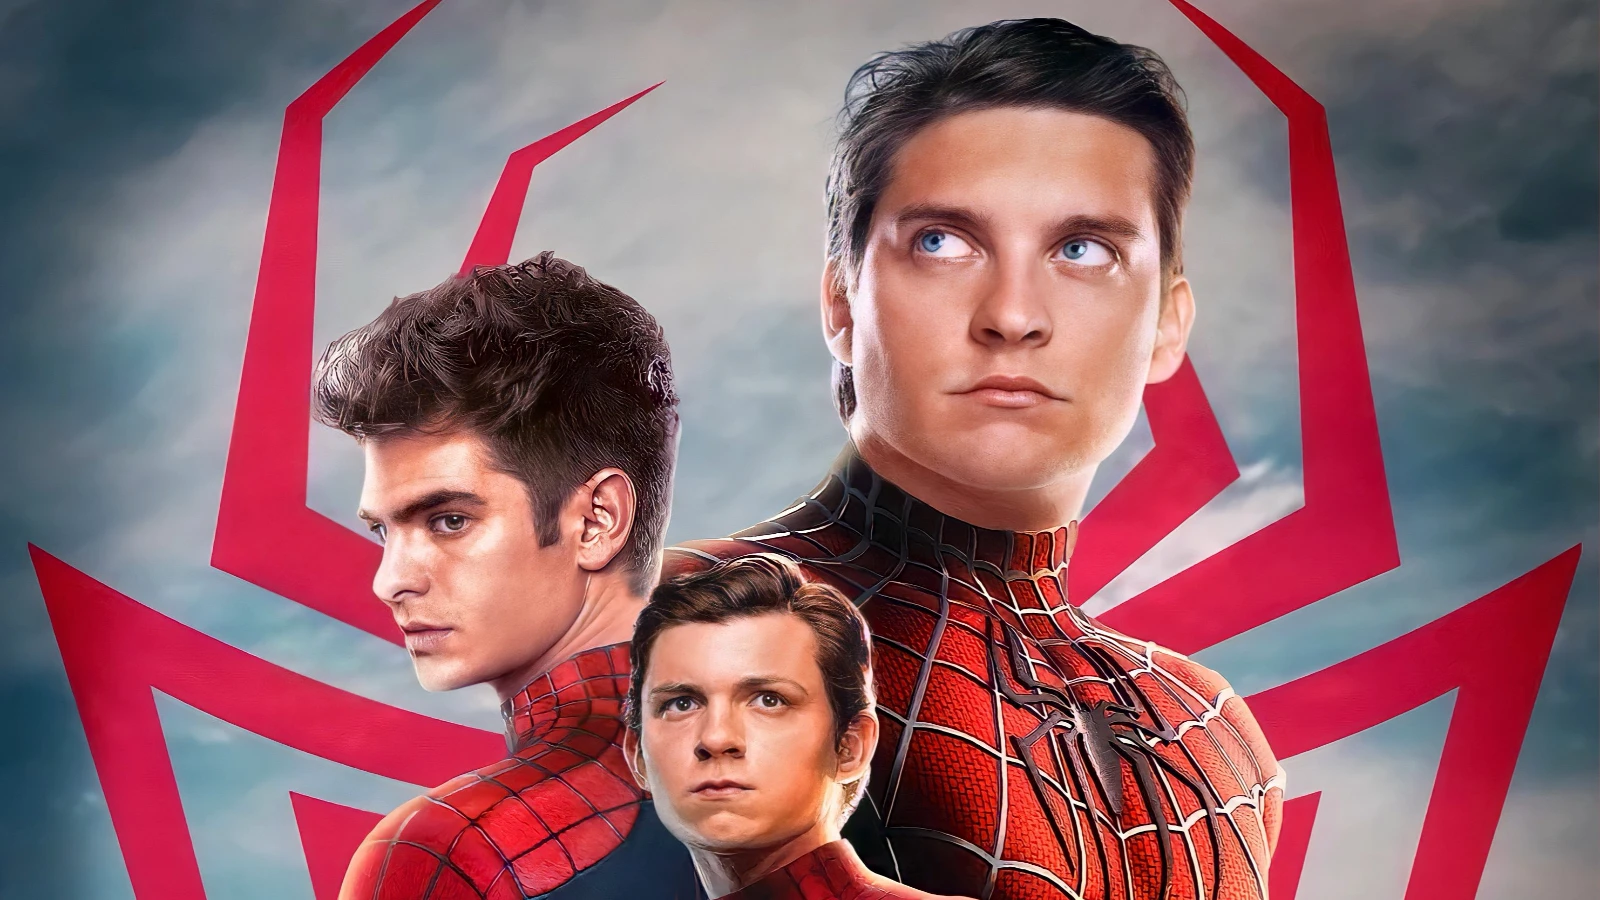 Andrew Garfield & Spider-Man 2 cast chat The Amazing Spider-Man 3 